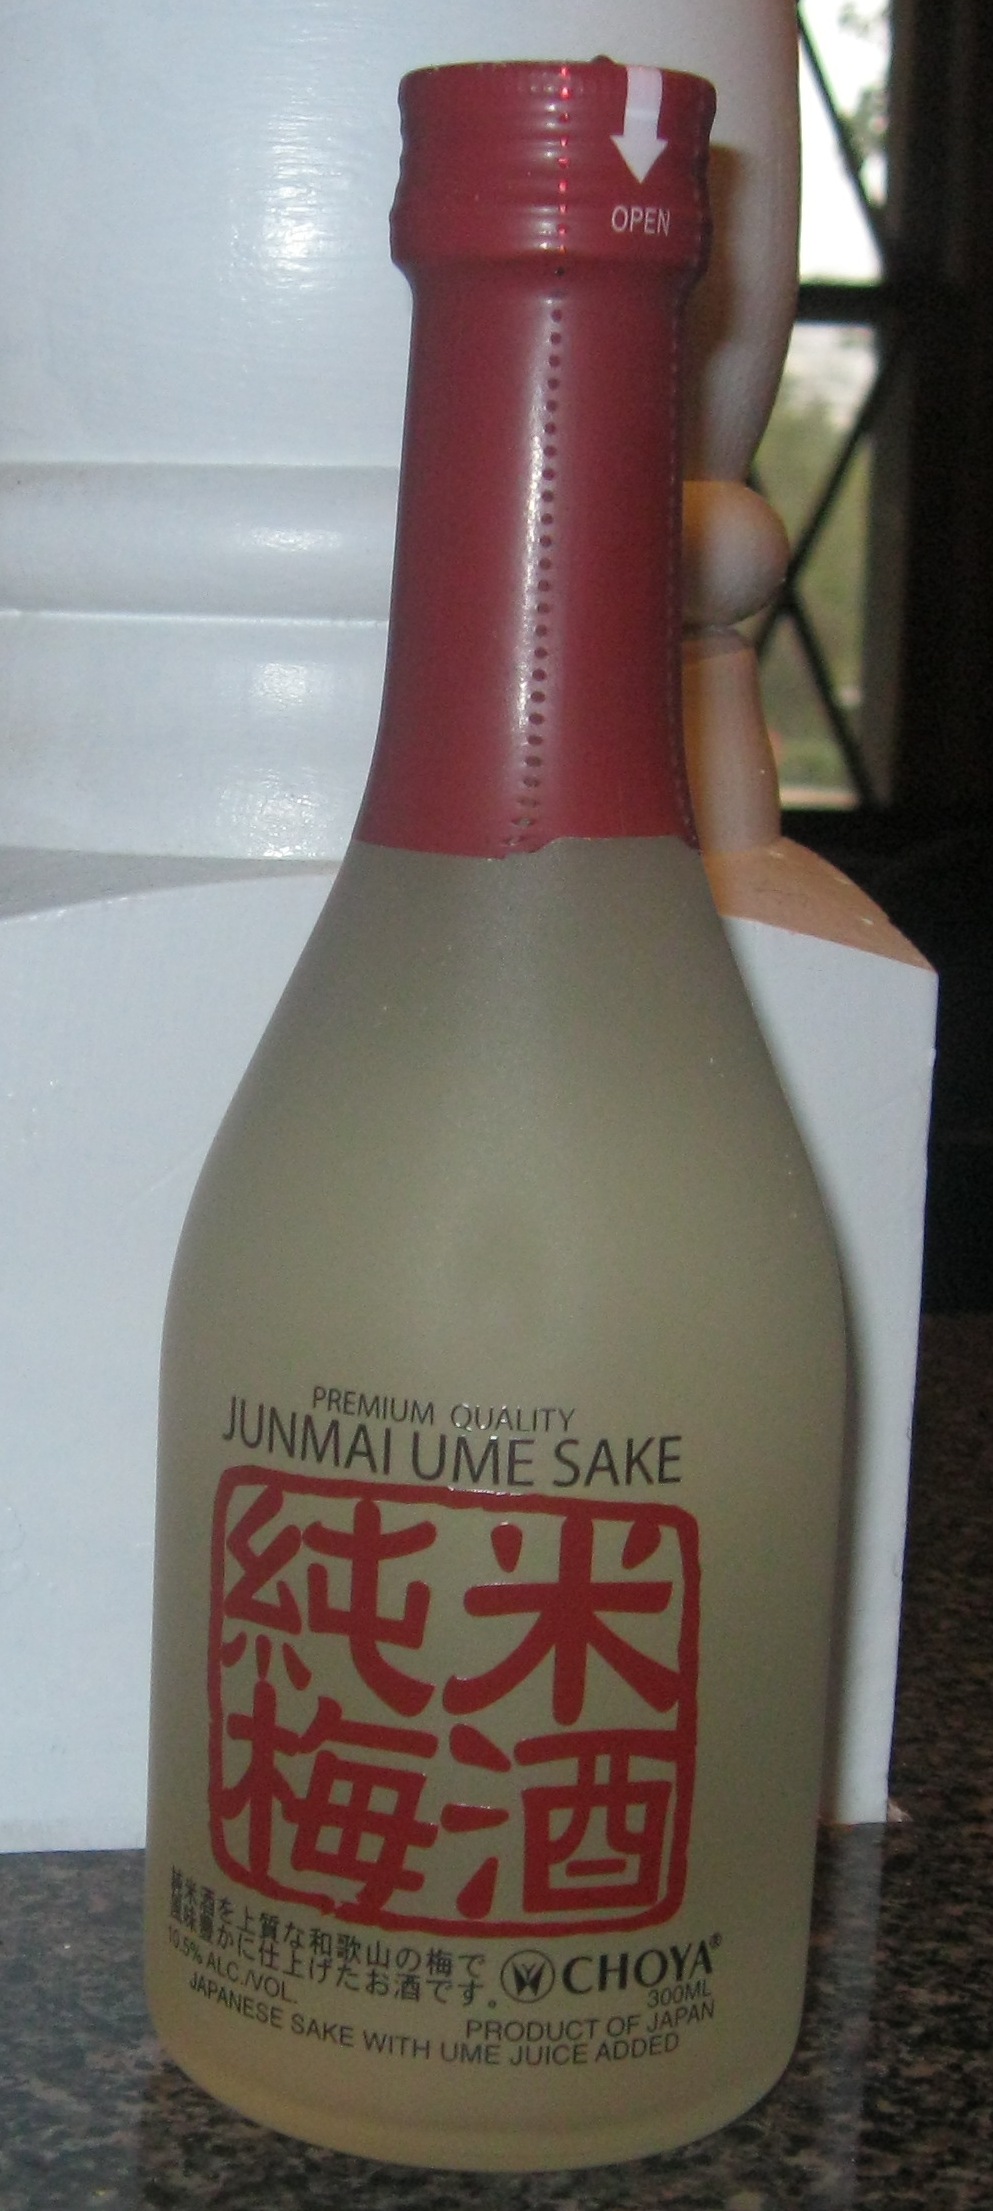 choya s junmai ume sake is a premium flavored sake flavored with ume ...